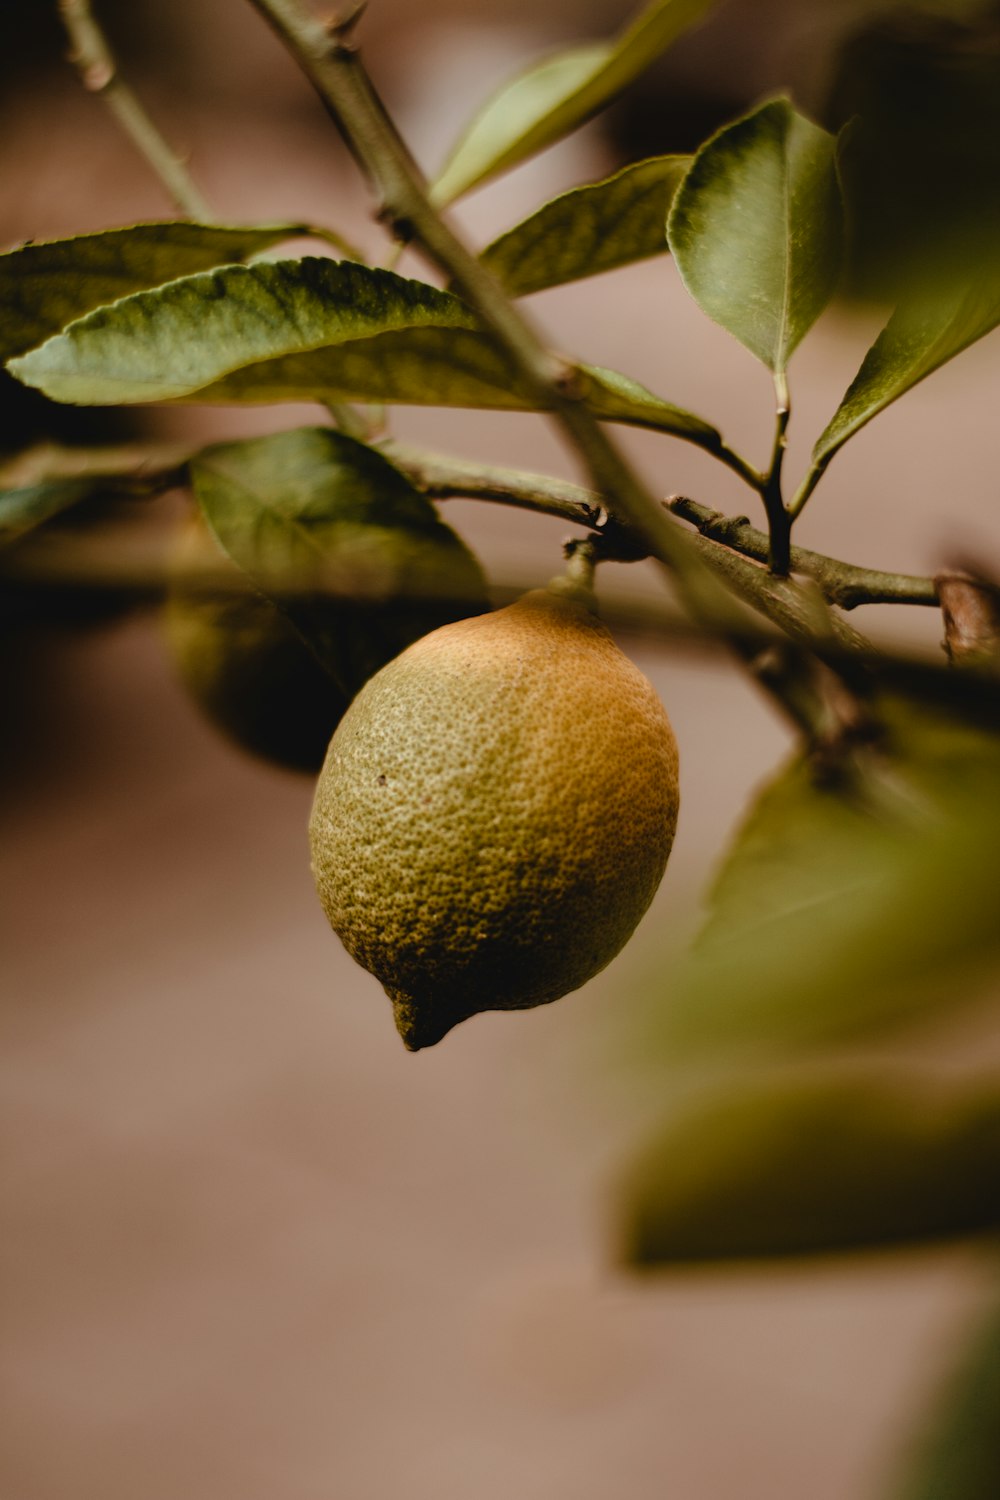 a close up of a lemon on a tree branch